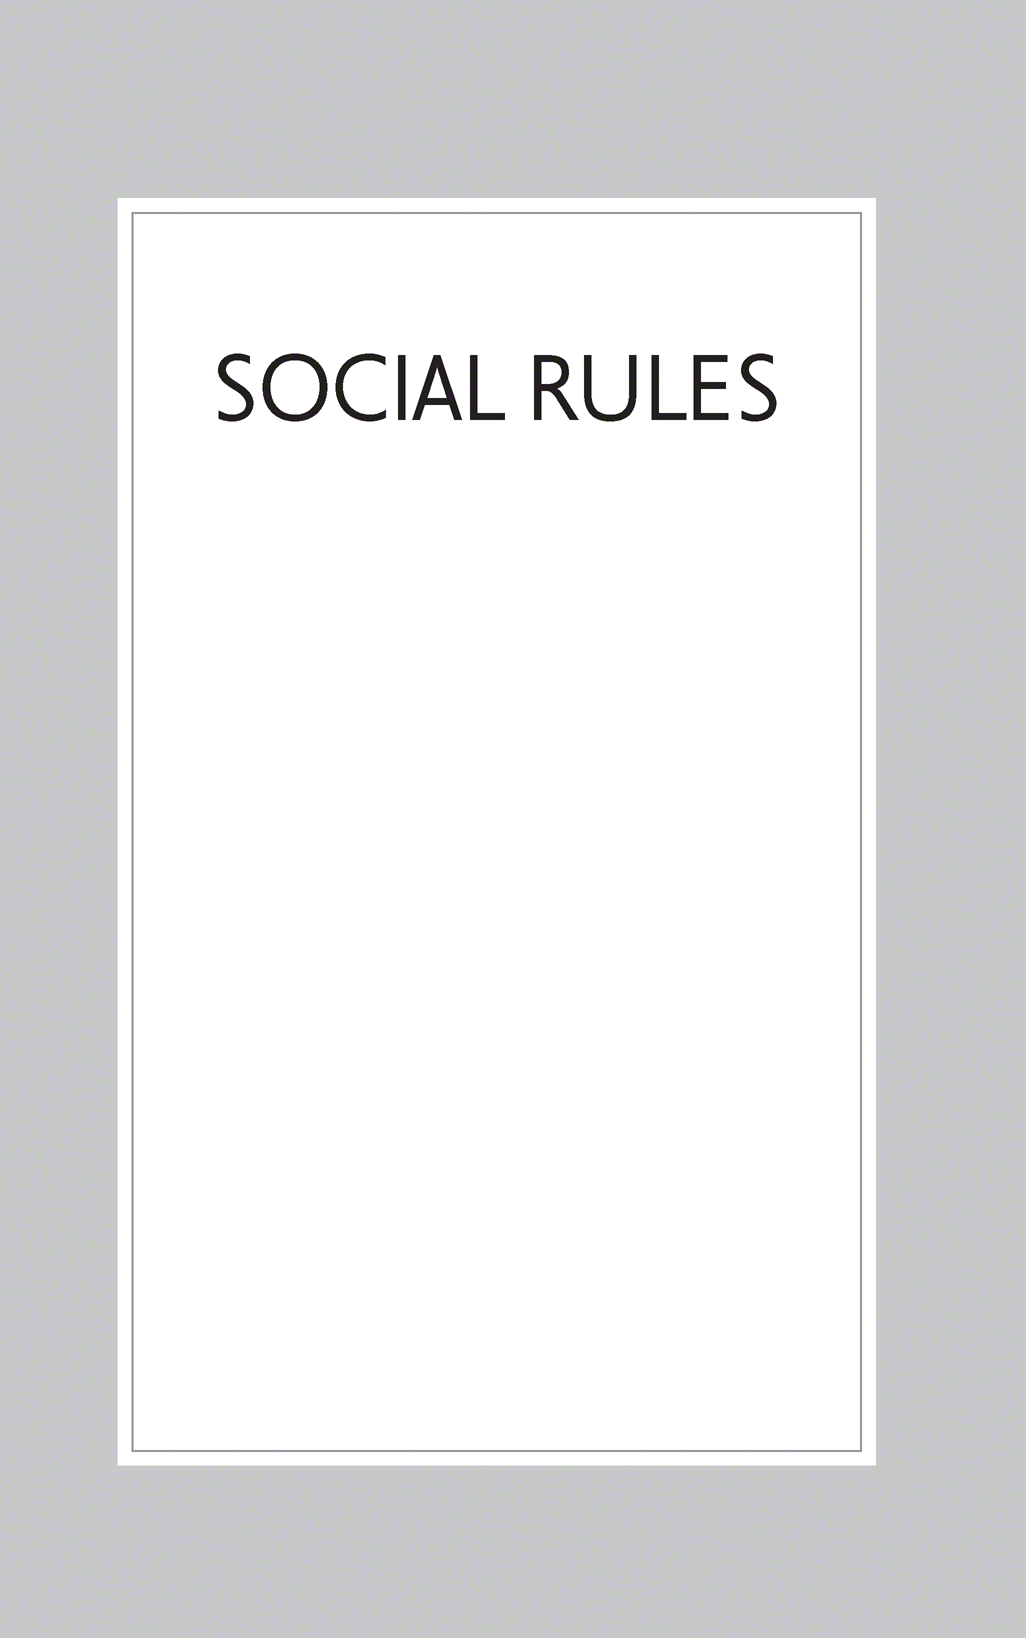 SOCIAL RULES